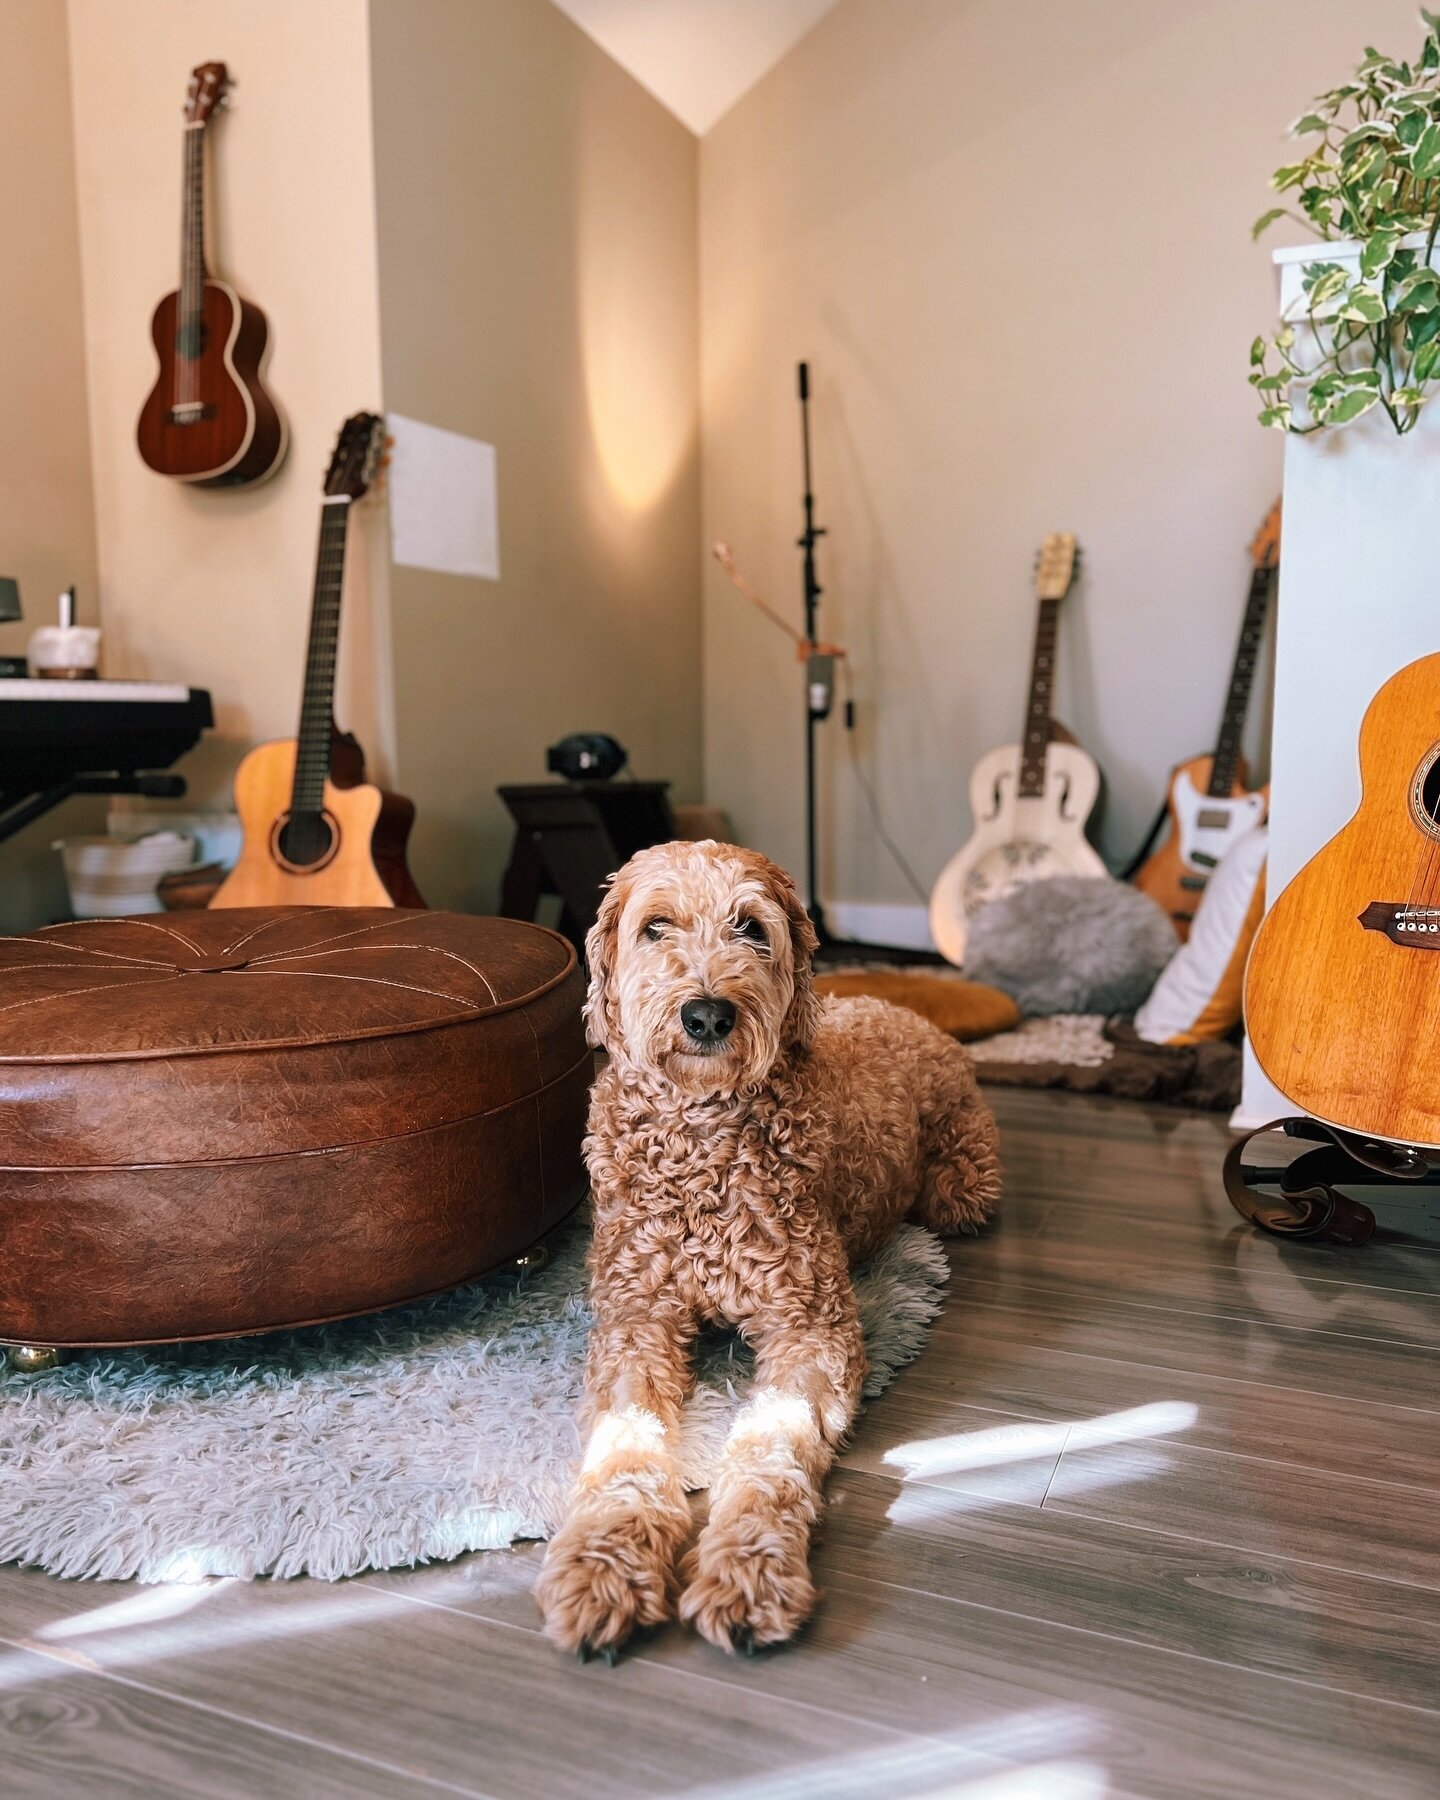 Things in my home that just make sense: my dog and guitars in every corner 🐾🎶✨ @ferrisdogdayoff #guitarist #guitarlife